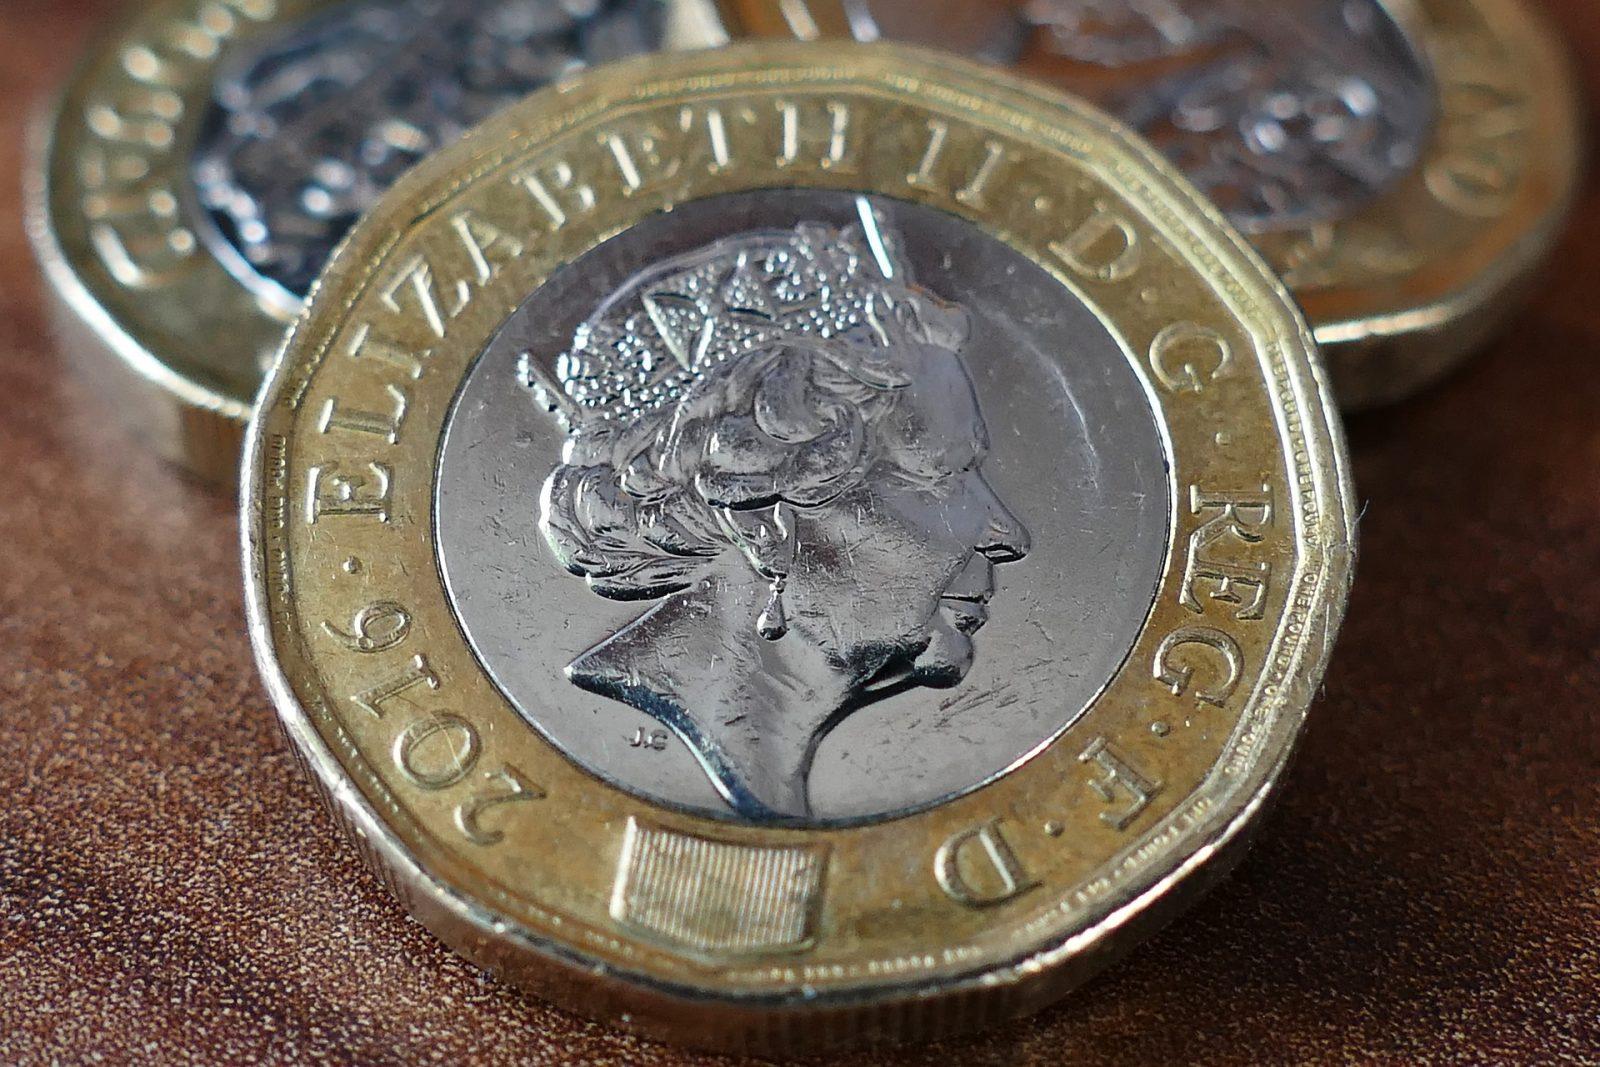 Photograph of pound coin